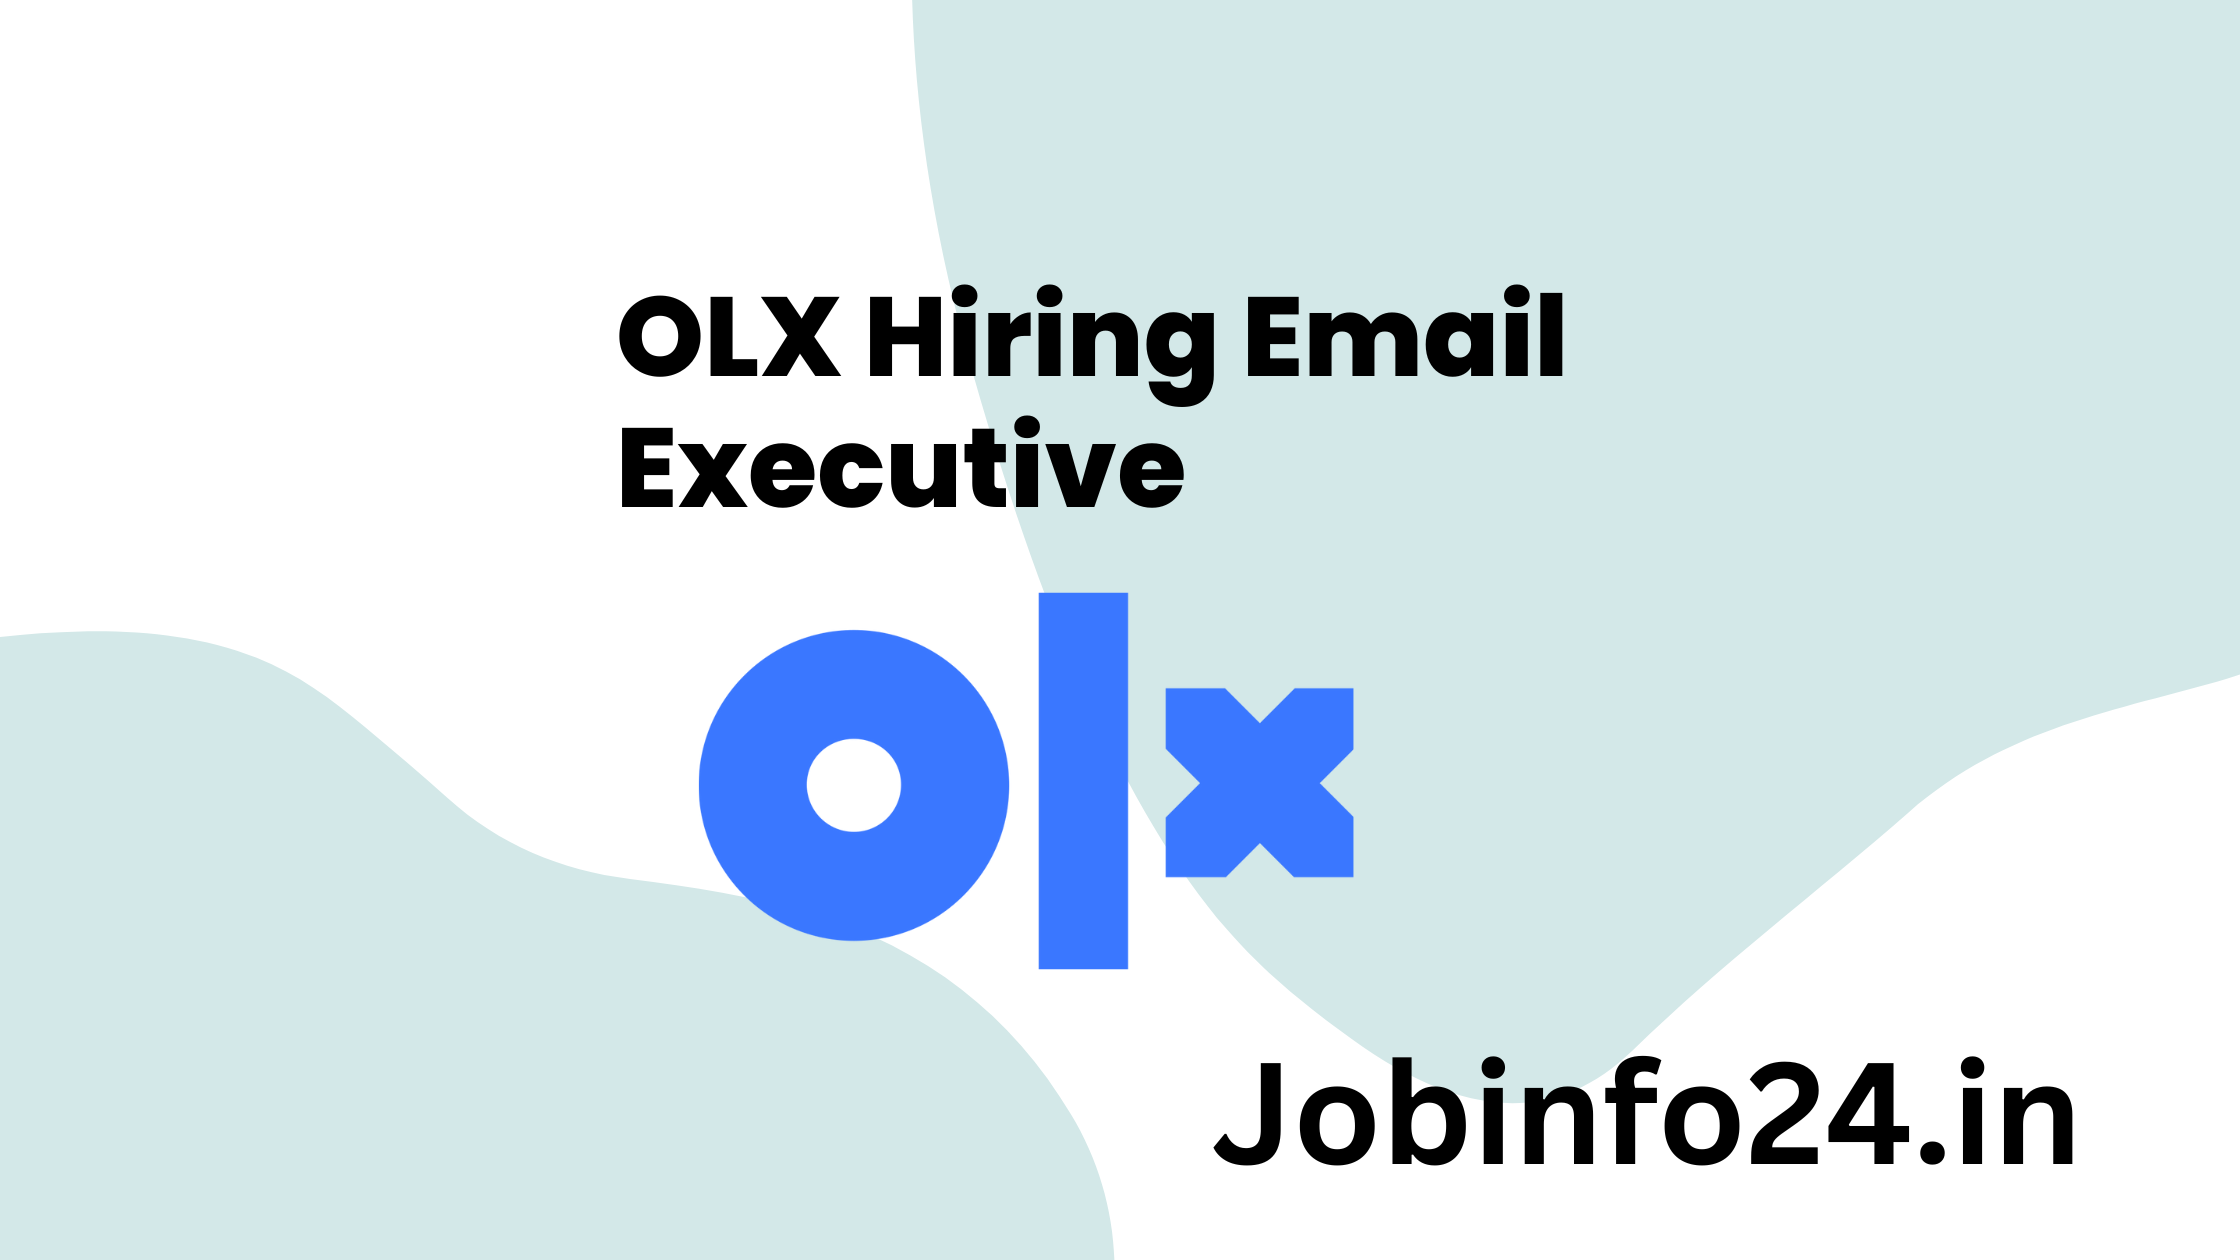 OLX Hiring Email Executive